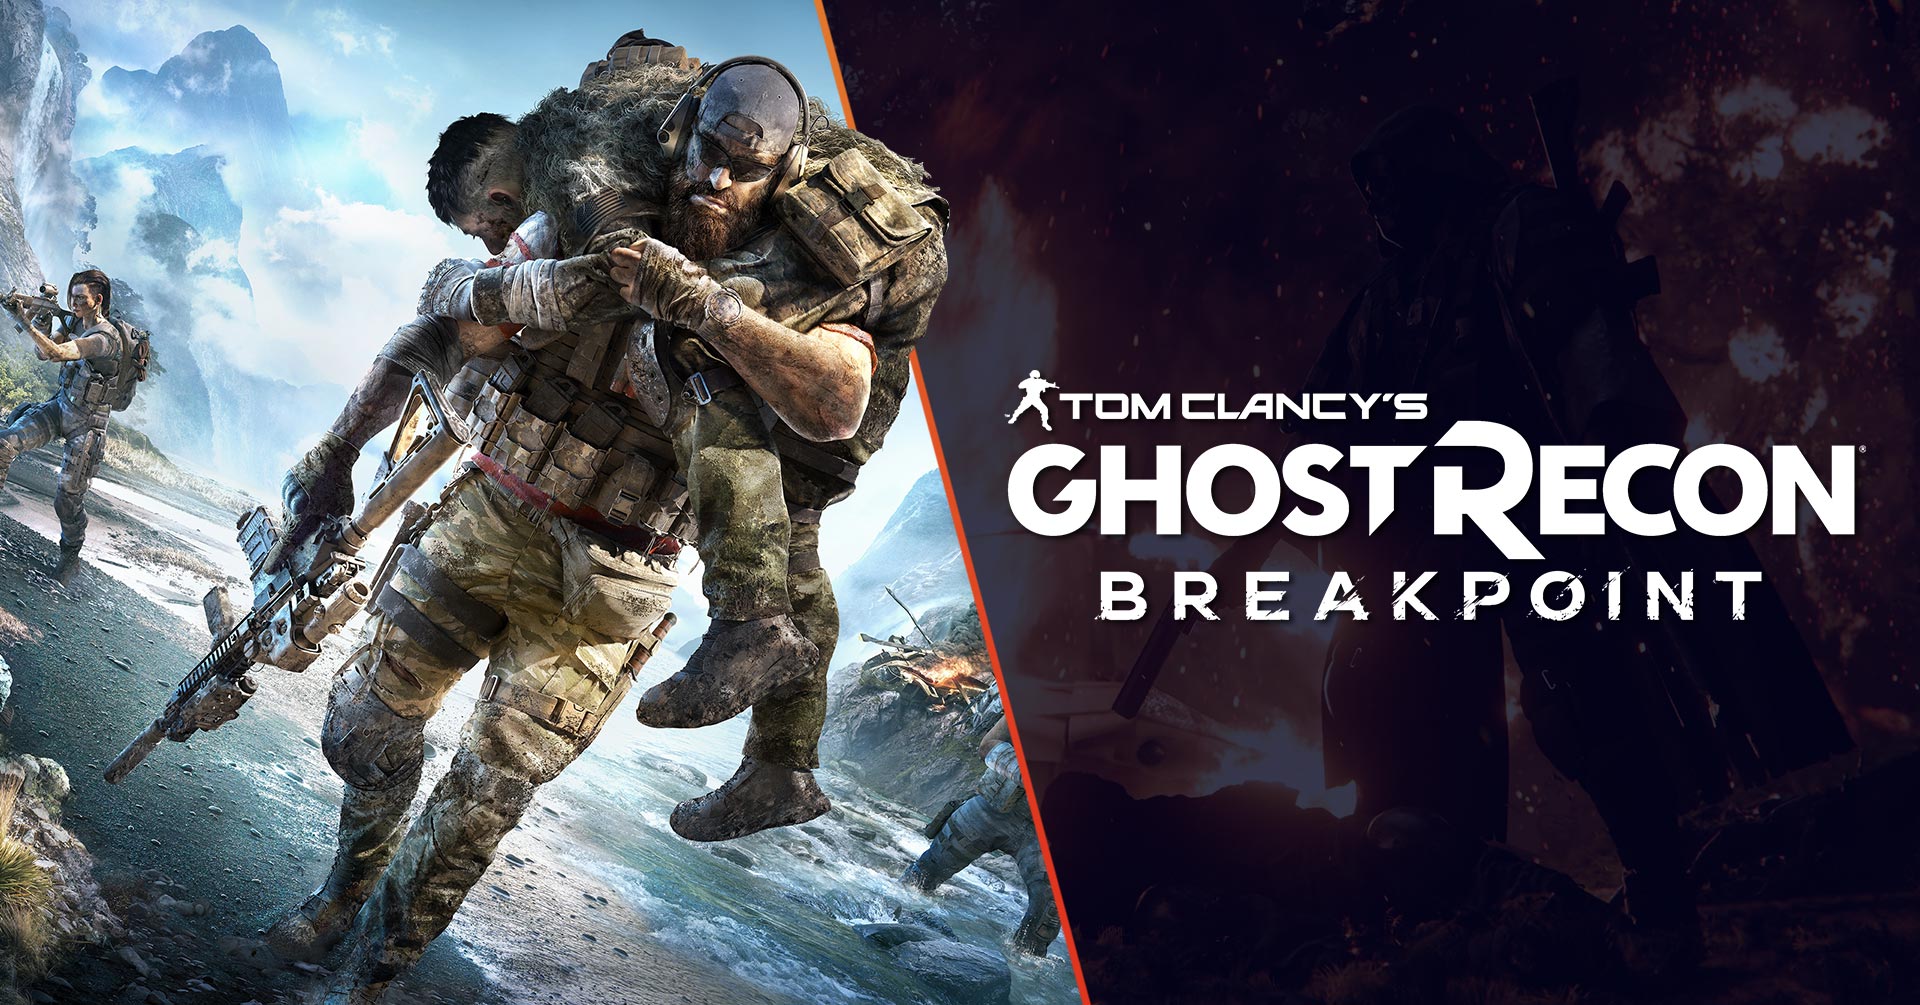 Ghost Recon Breakpoint Beta milik Tom Clancy dibuka pada tanggal 26-29 September